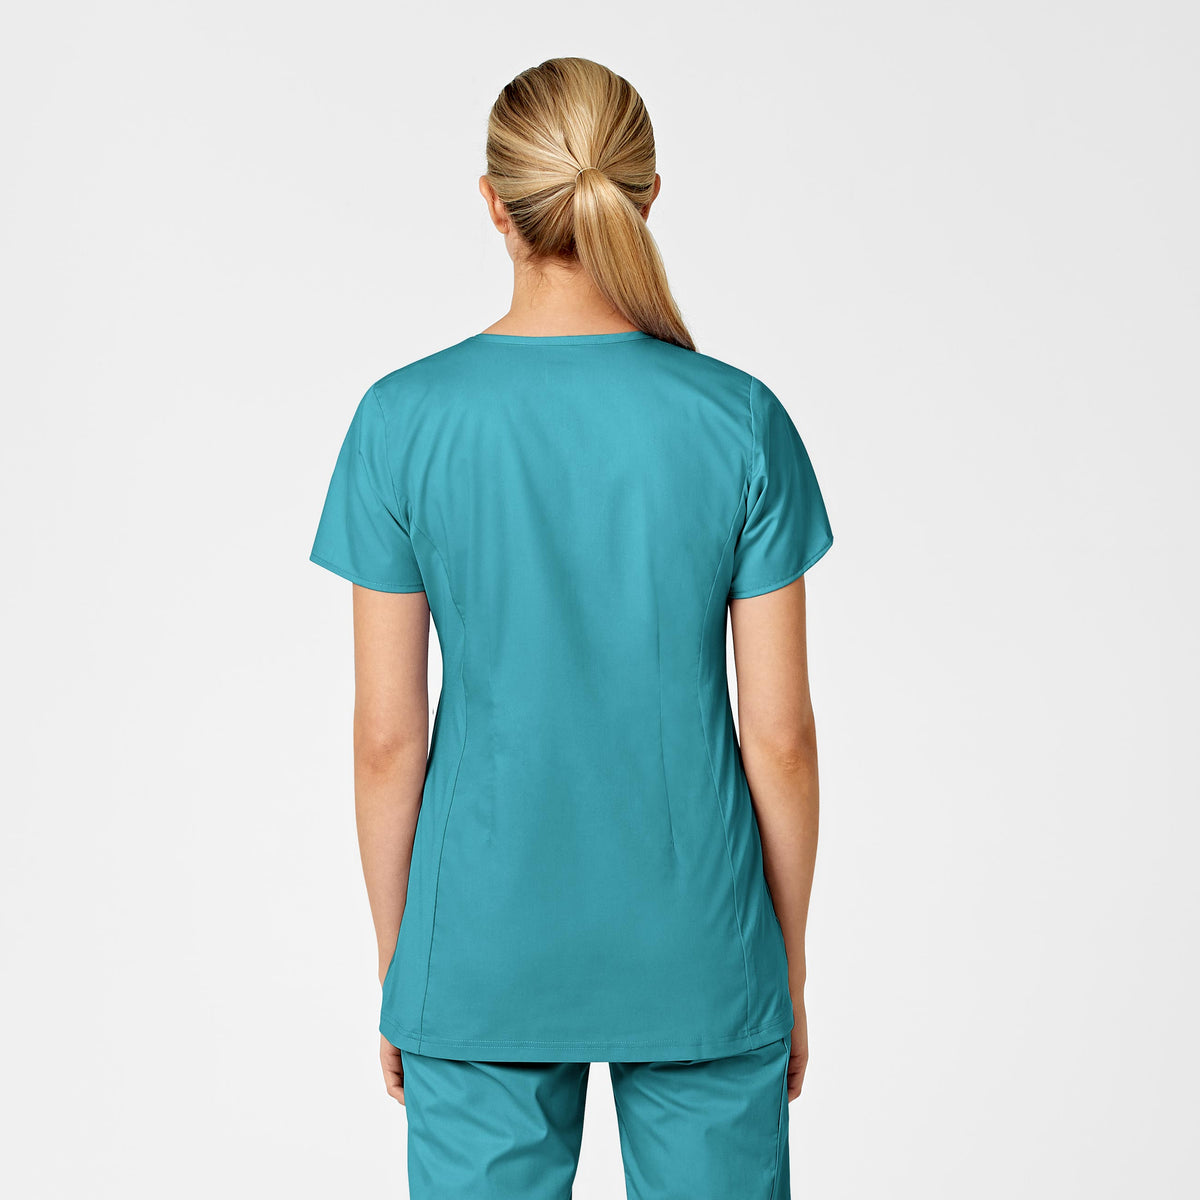 Buy Goldstroms Maternity Nursing Top - Turquoise Black Online at